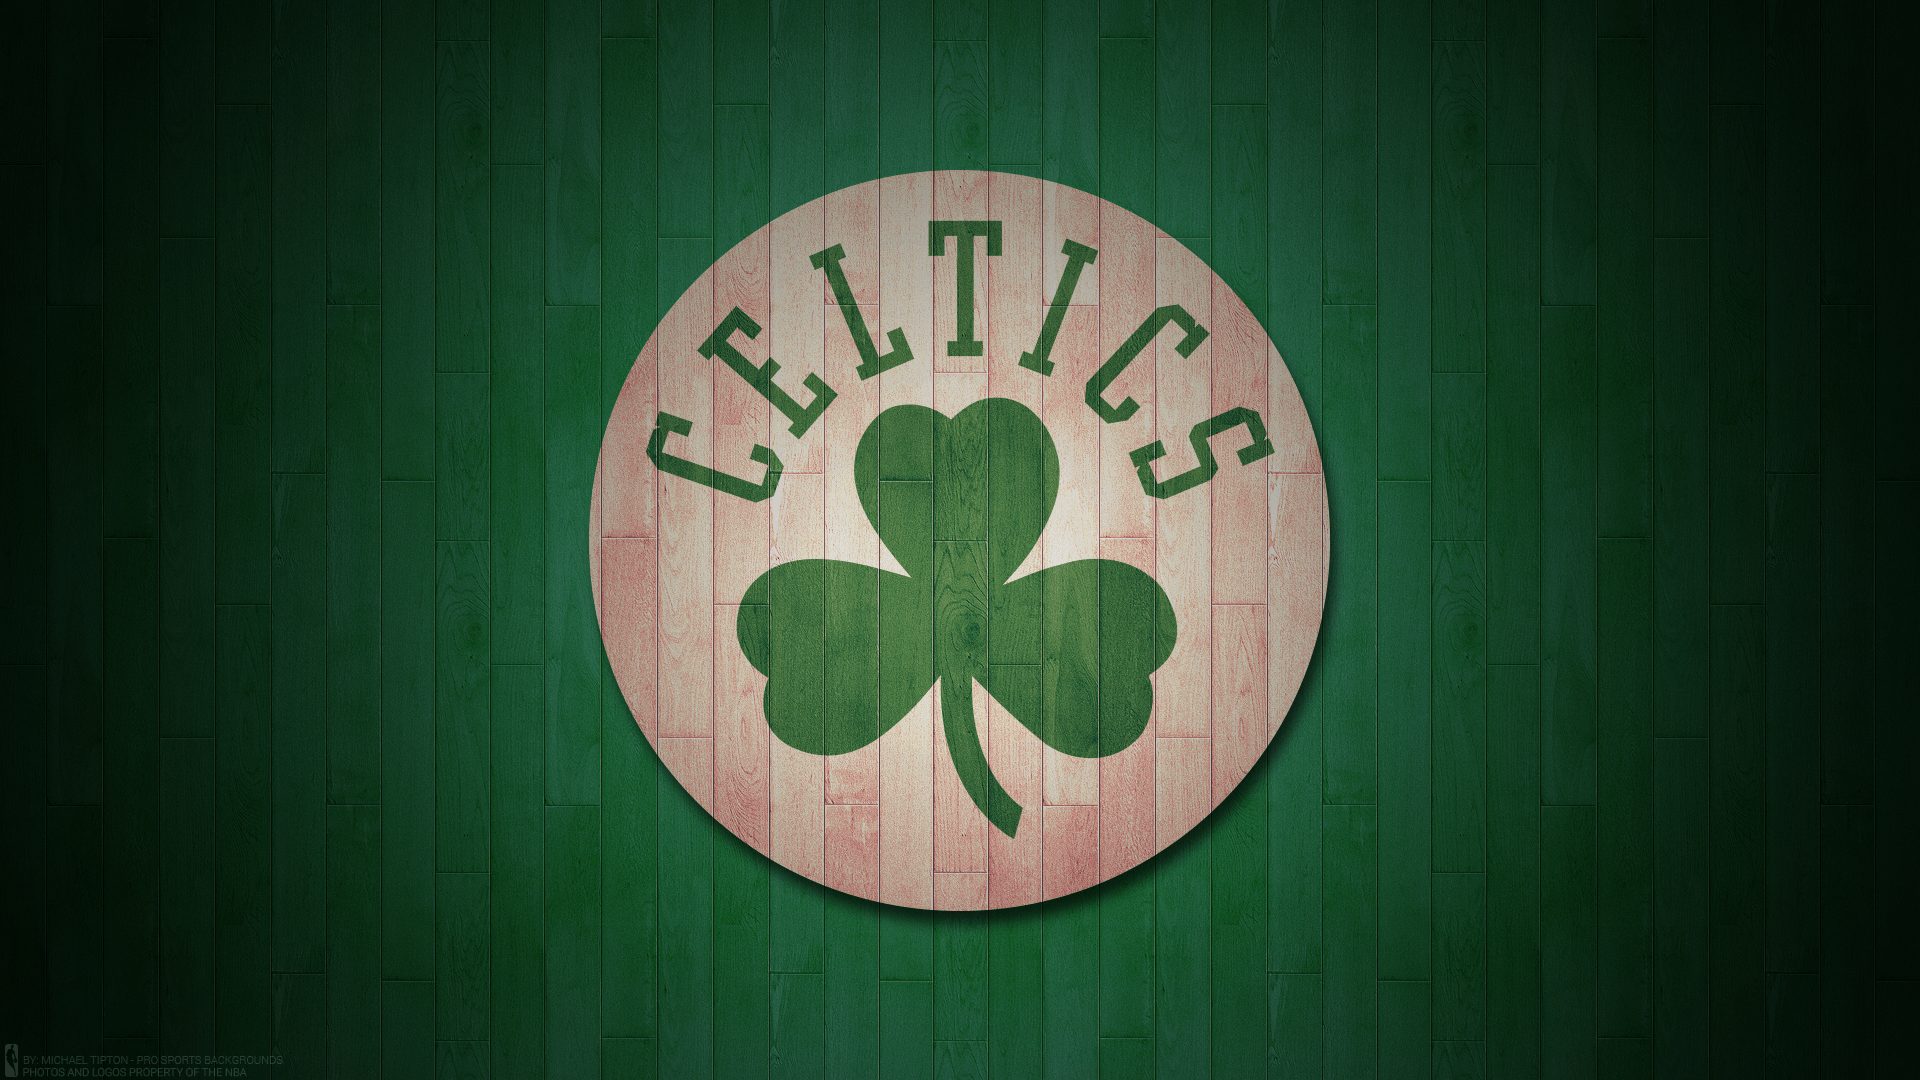 Boston Celtics Wallpaper. iPhone. Android